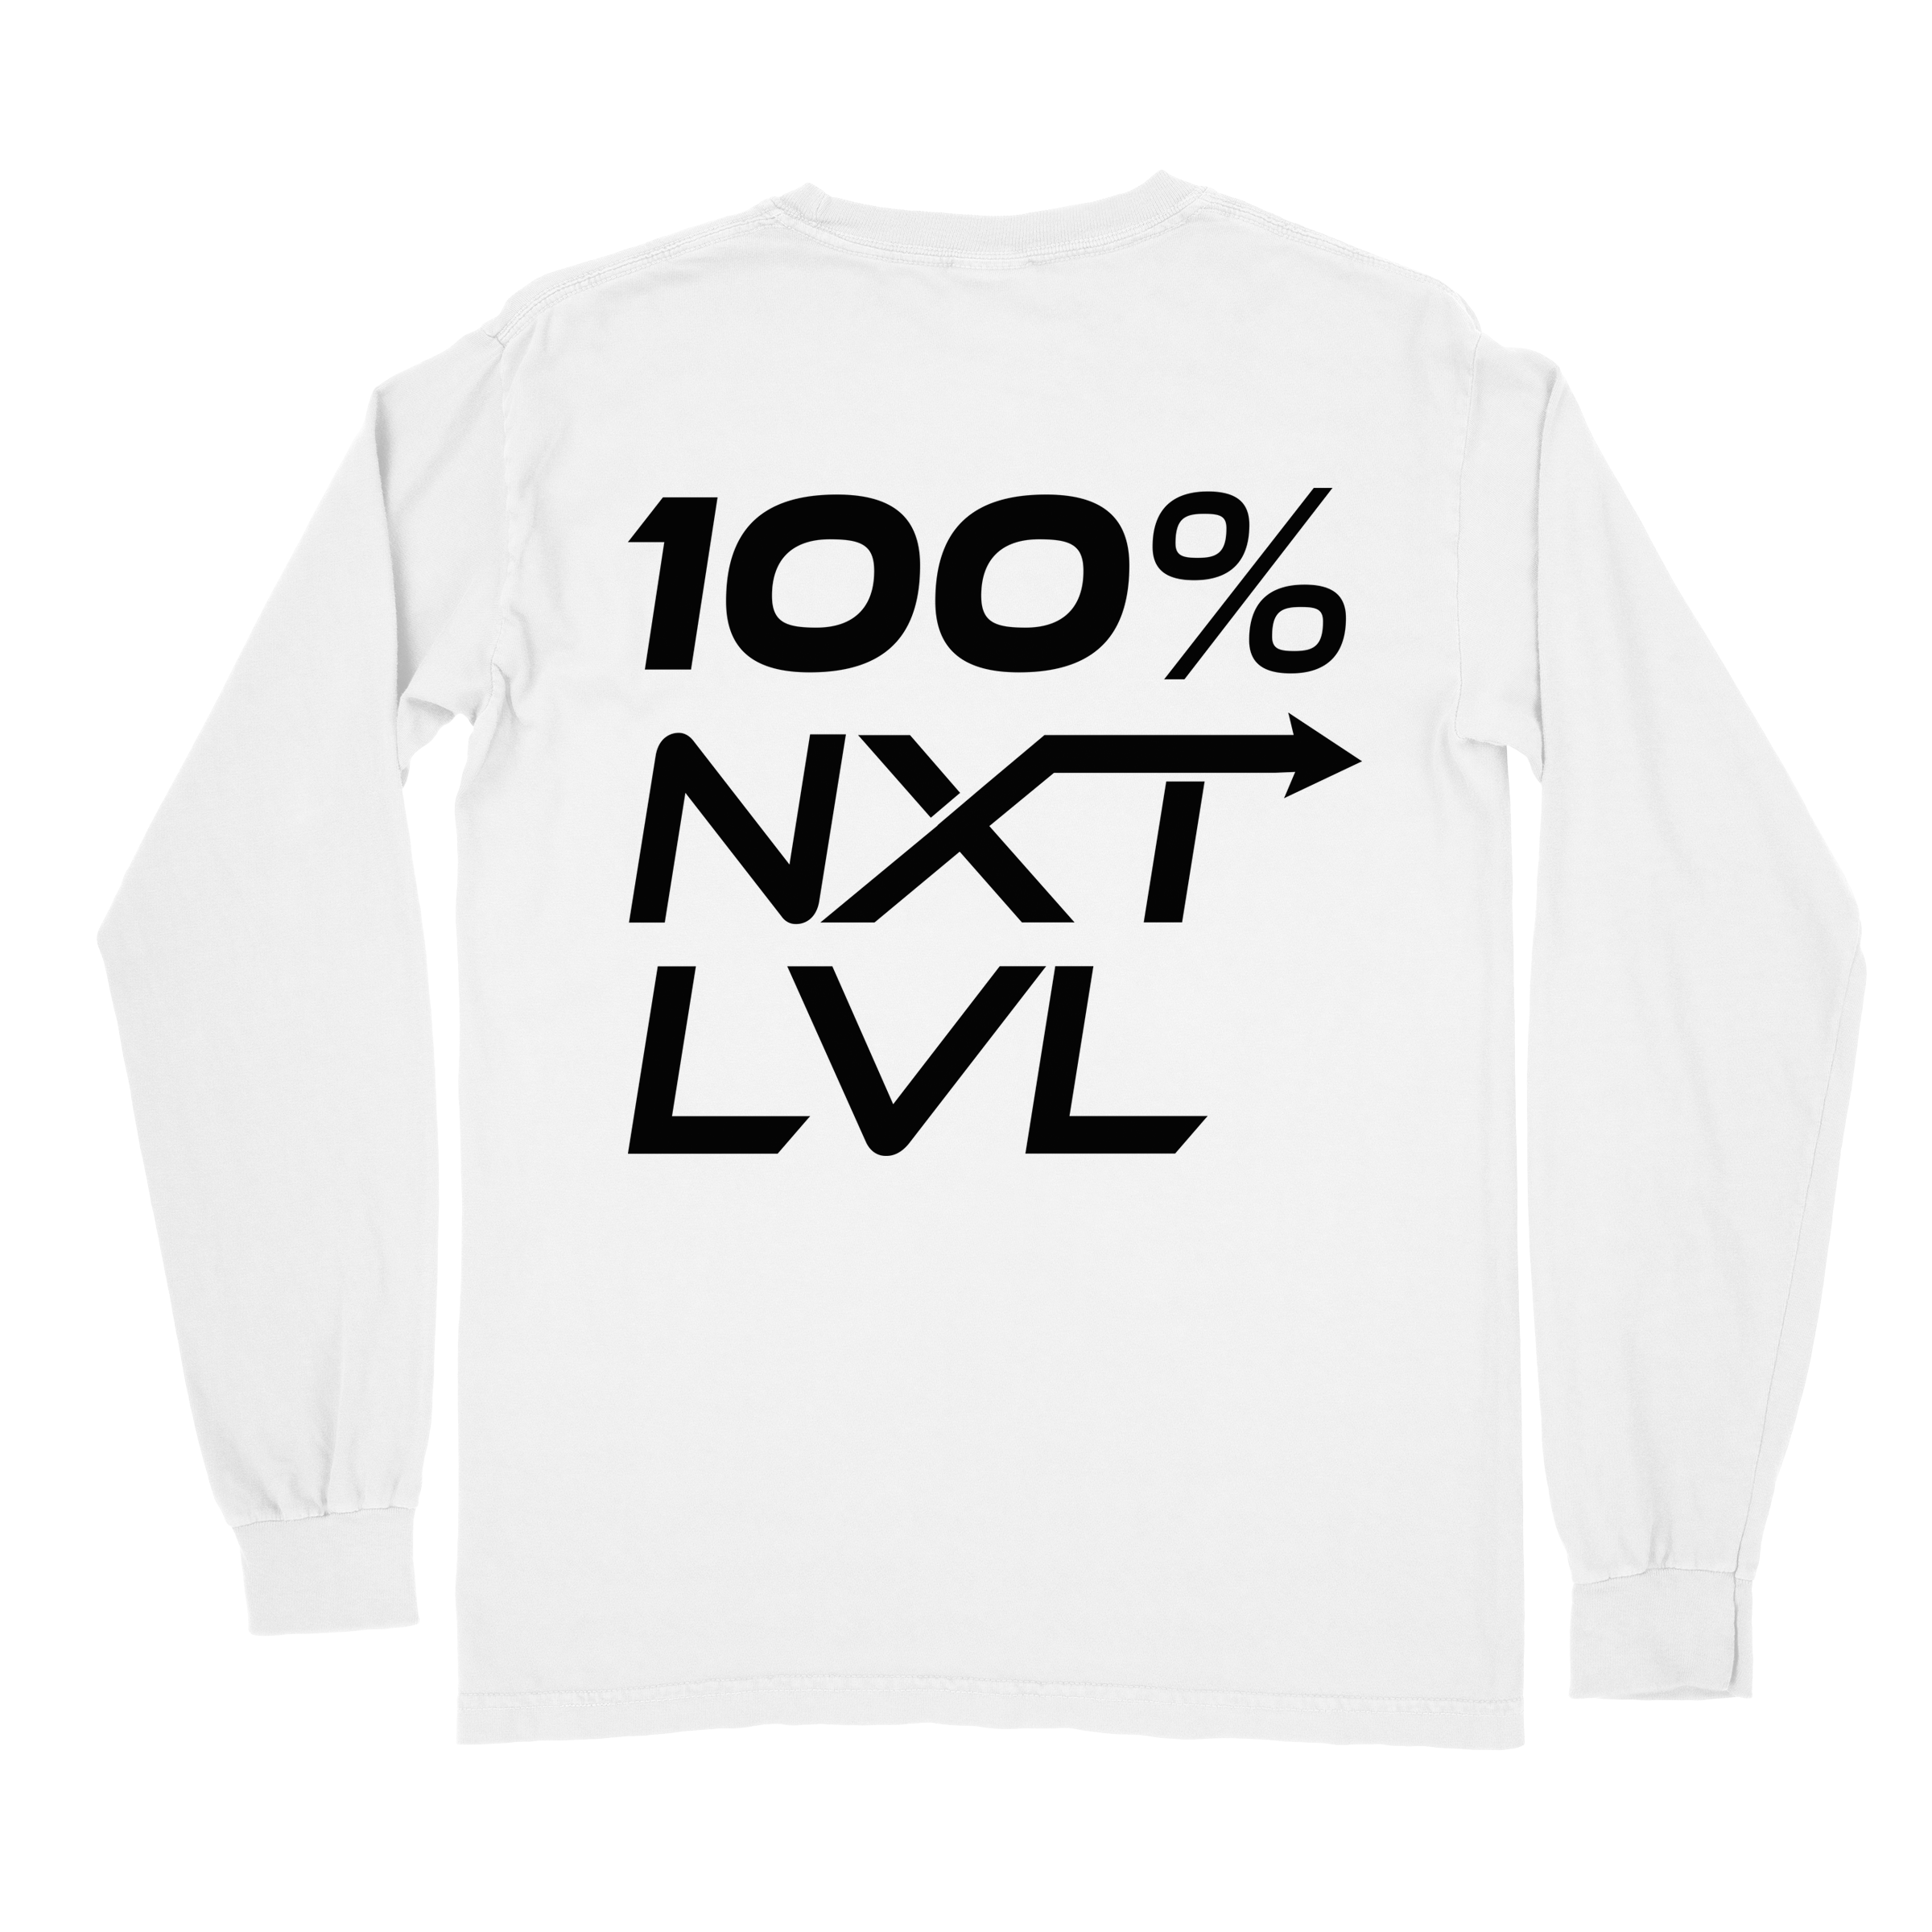 100% NXT LVL Long Sleeve- White